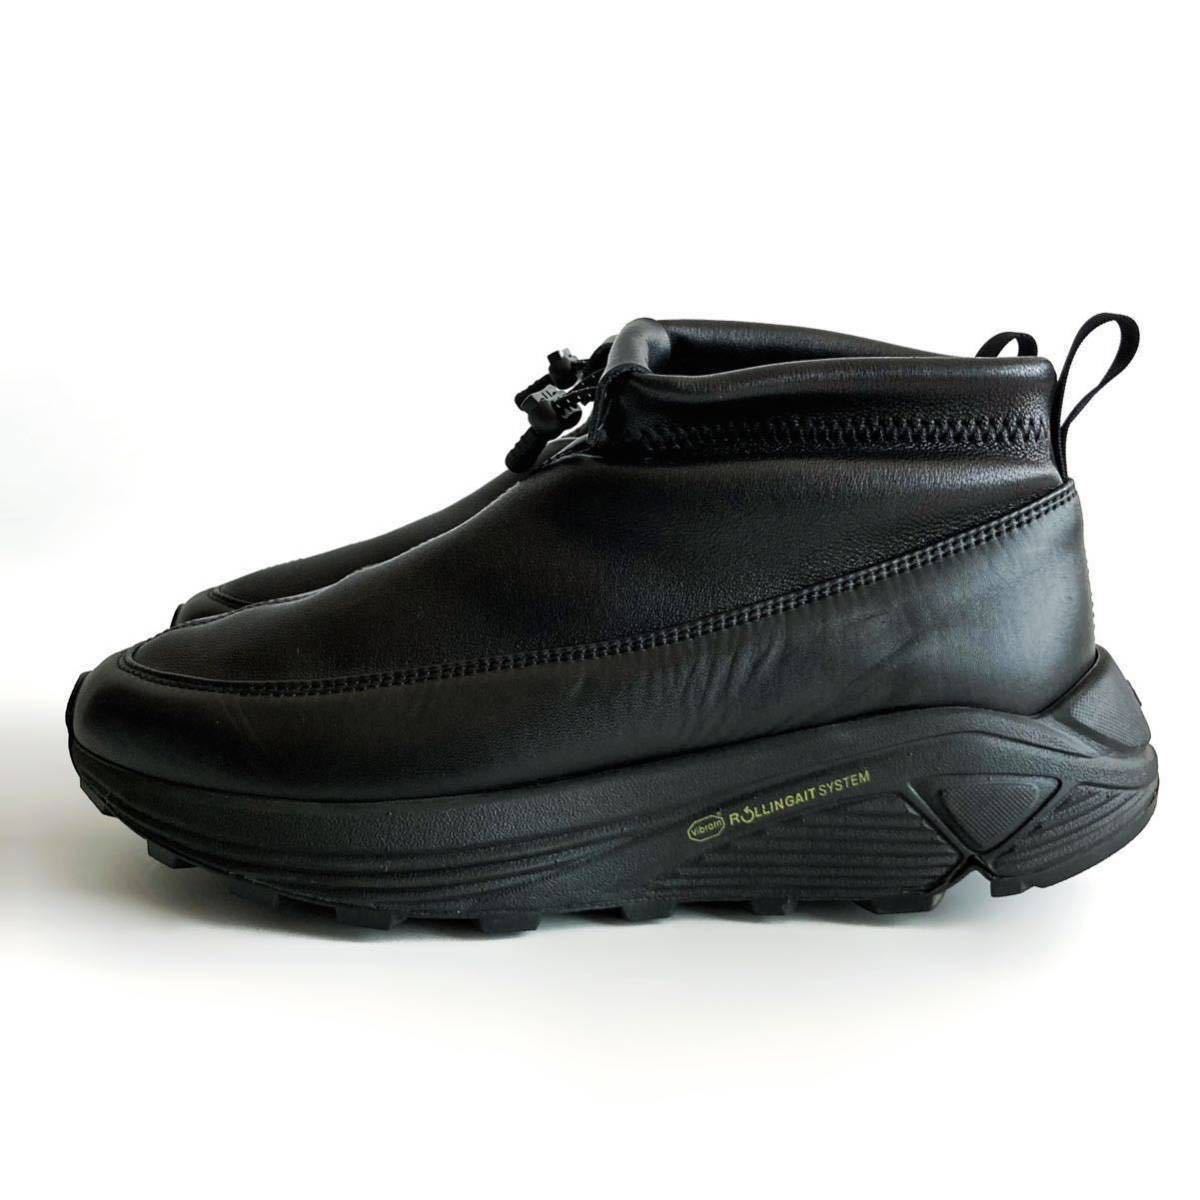  beautiful goods SnowPeak Leather Thermal Mock Shoes Snow Peak leather thermal mok shoes 9 27cm sneakers boots HI-TEC made in Japan 